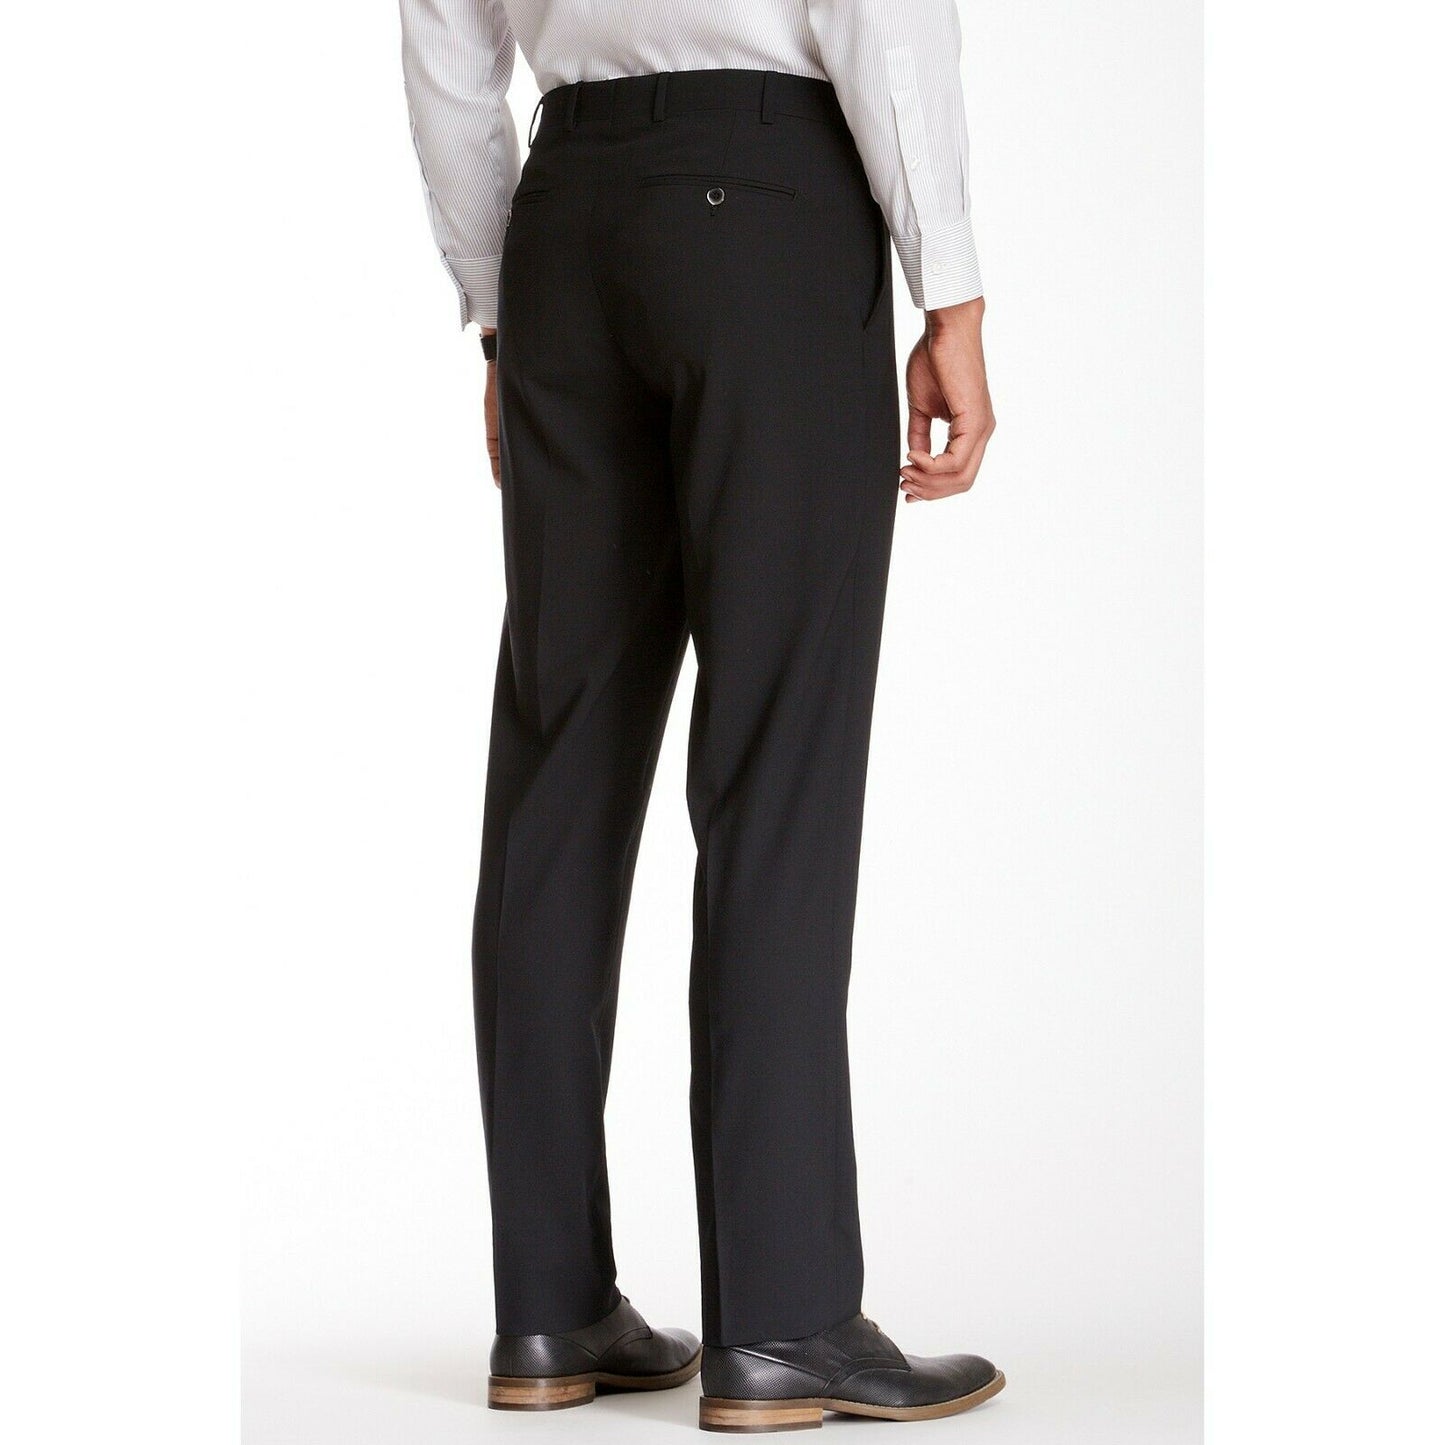 Ike Behar Mens Wool Flat Front Dress Suit Slacks Pants Black 36 NWT